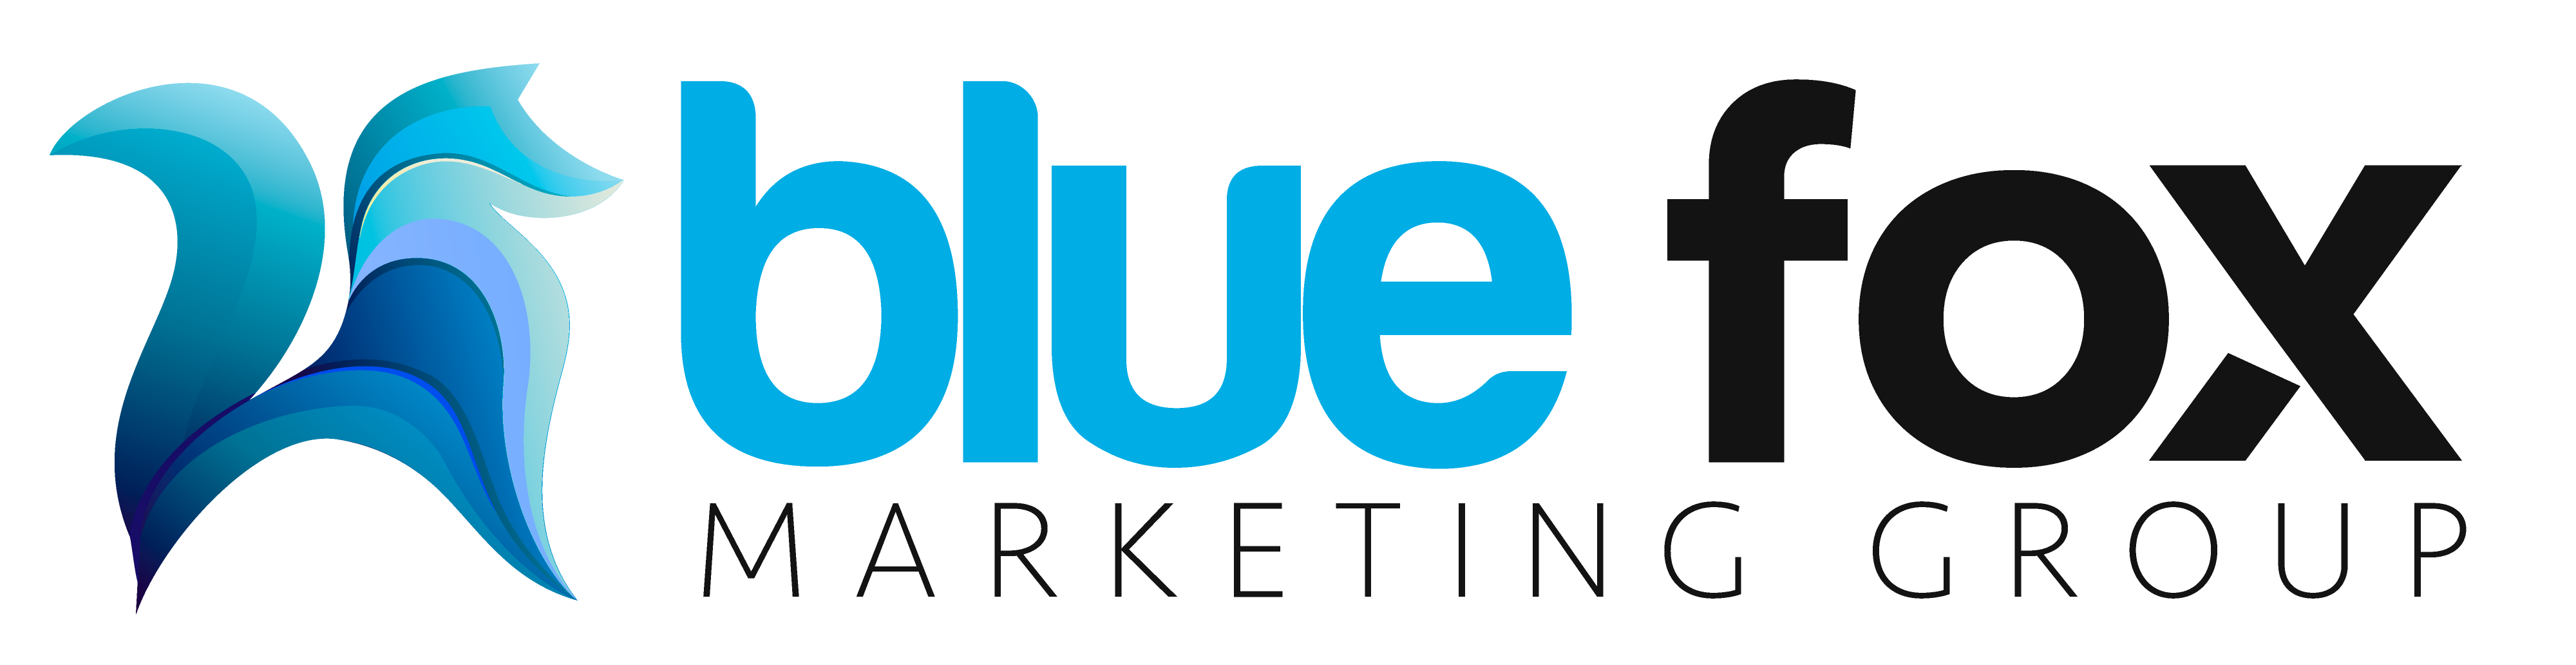 Blue Fox Marketing Group